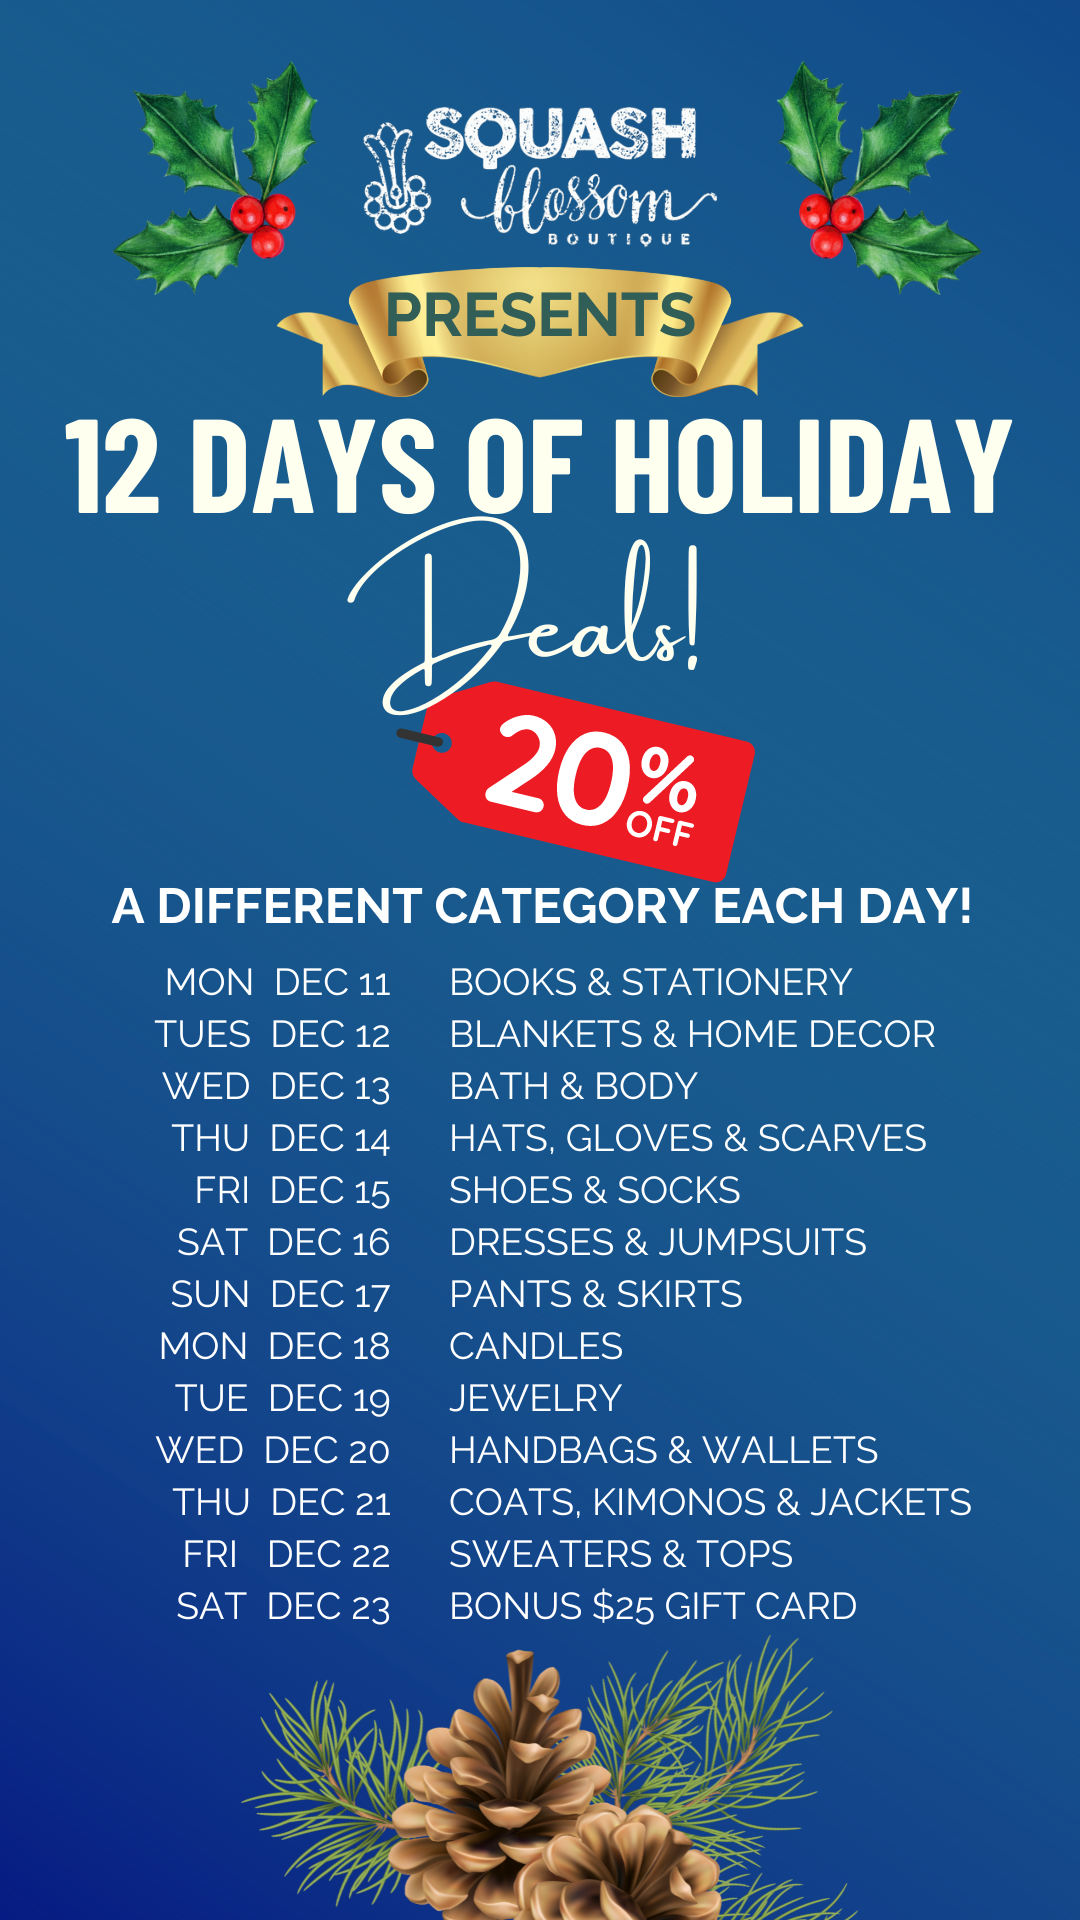 Holiday Deals